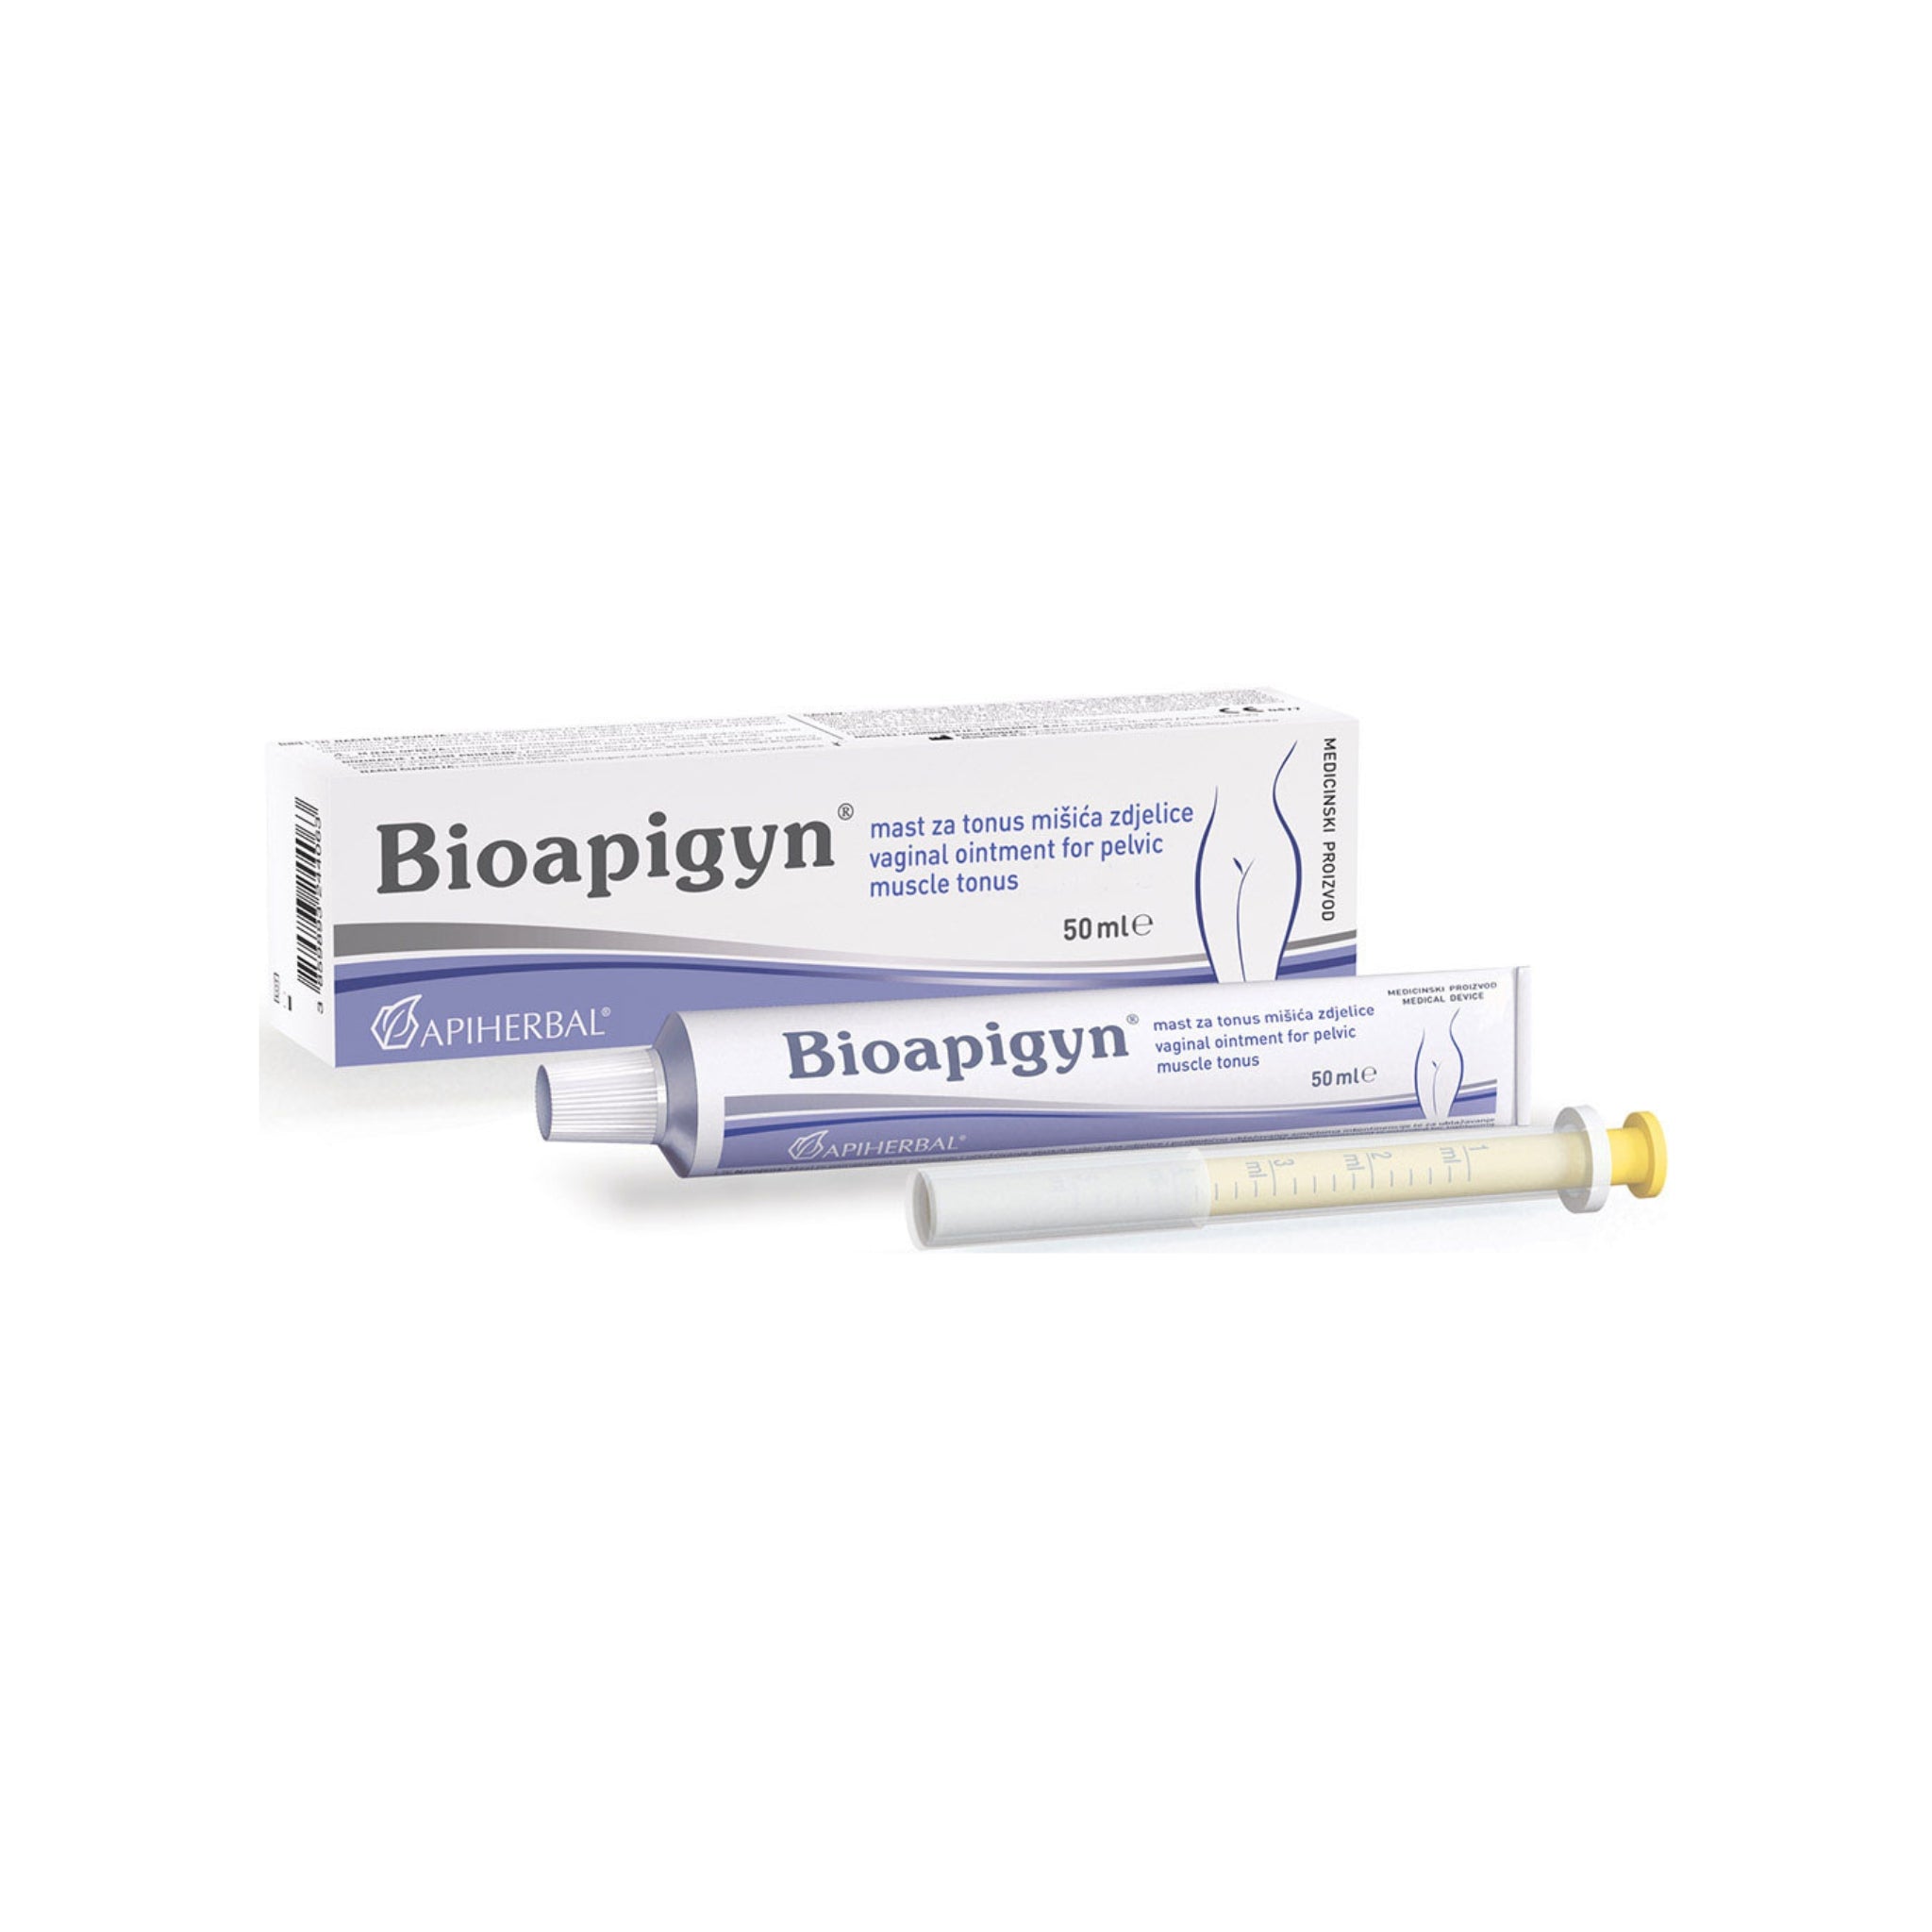 Bioapigyn® - Vaginalno mazilo za občutljivo nožnico in proti uhajanju urina 50 mL